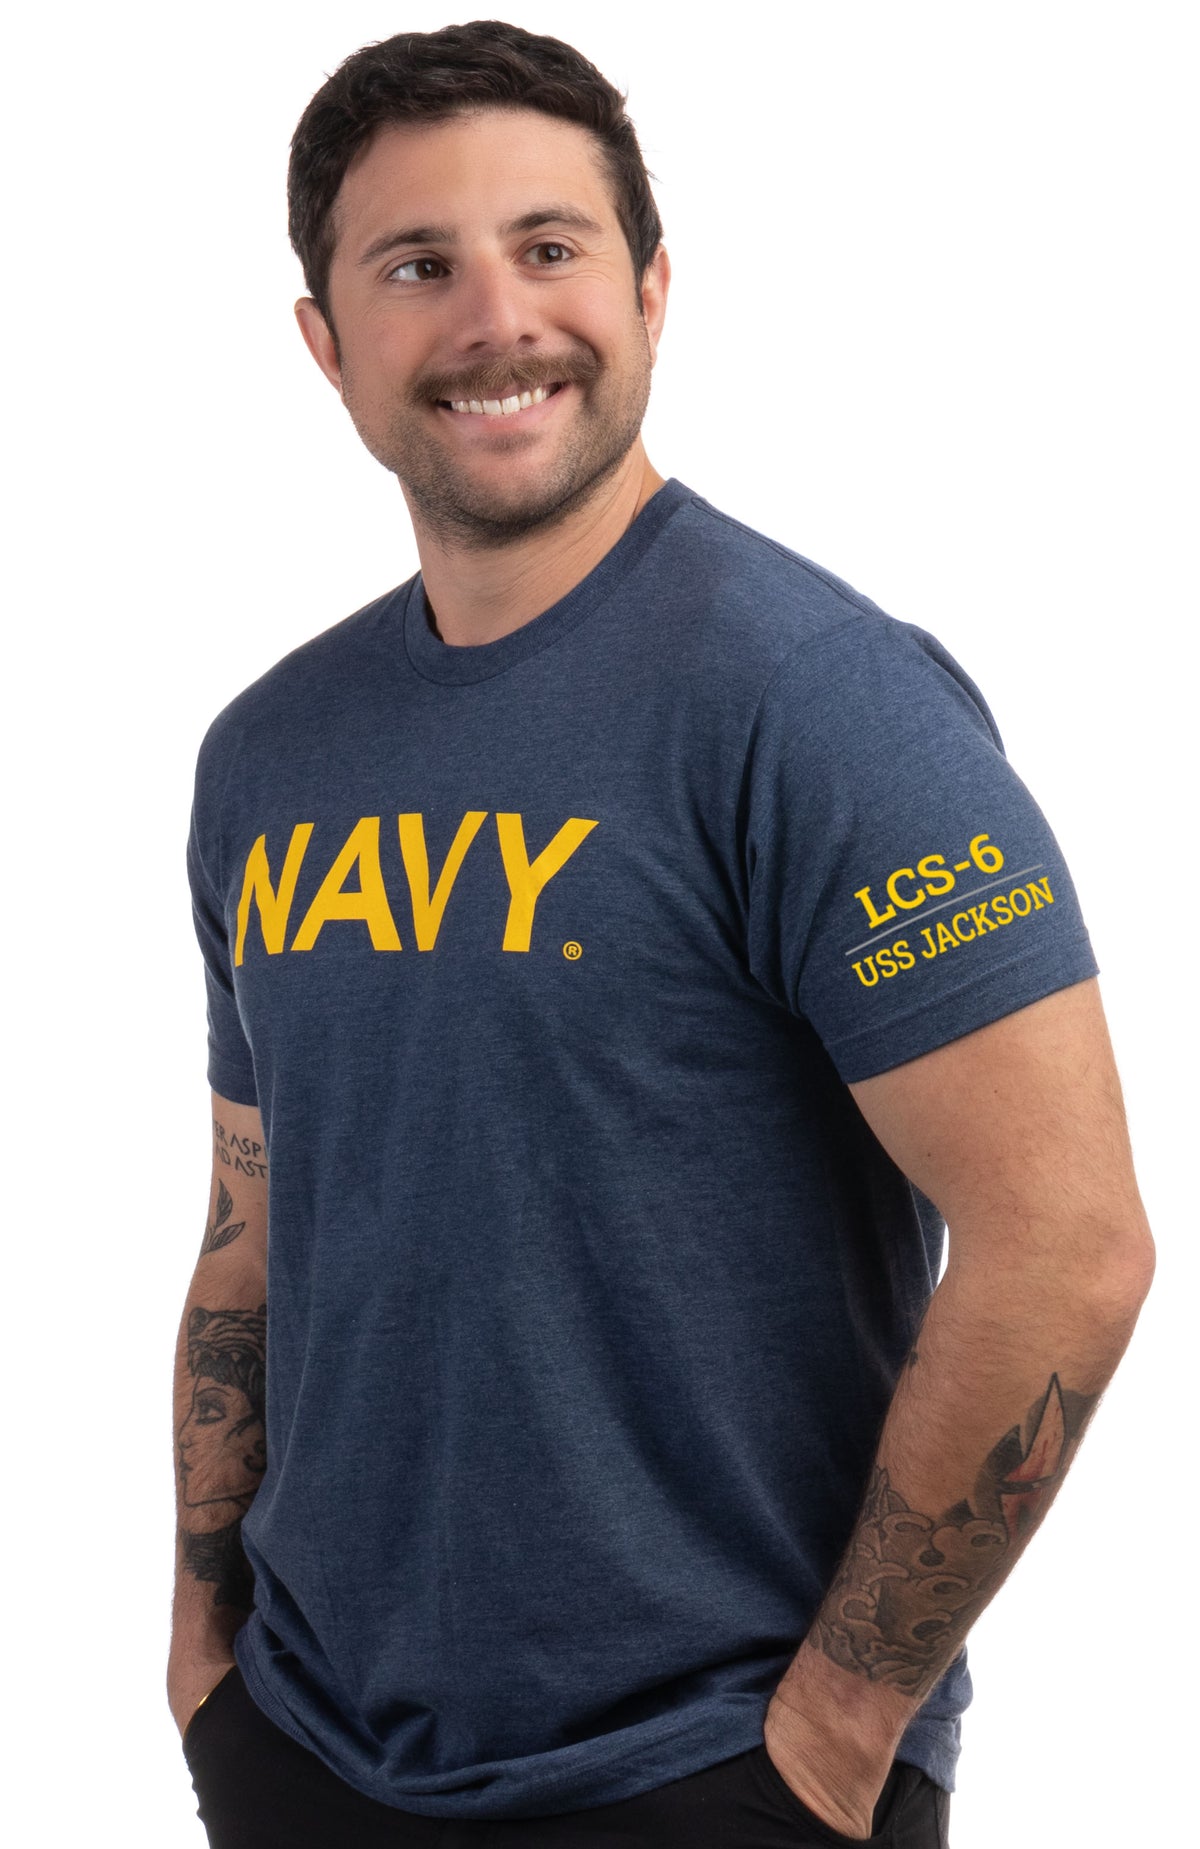 USS Jackson, LCS-6 | U.S. Navy Sailor Veteran USN United States Naval T-shirt for Men Women